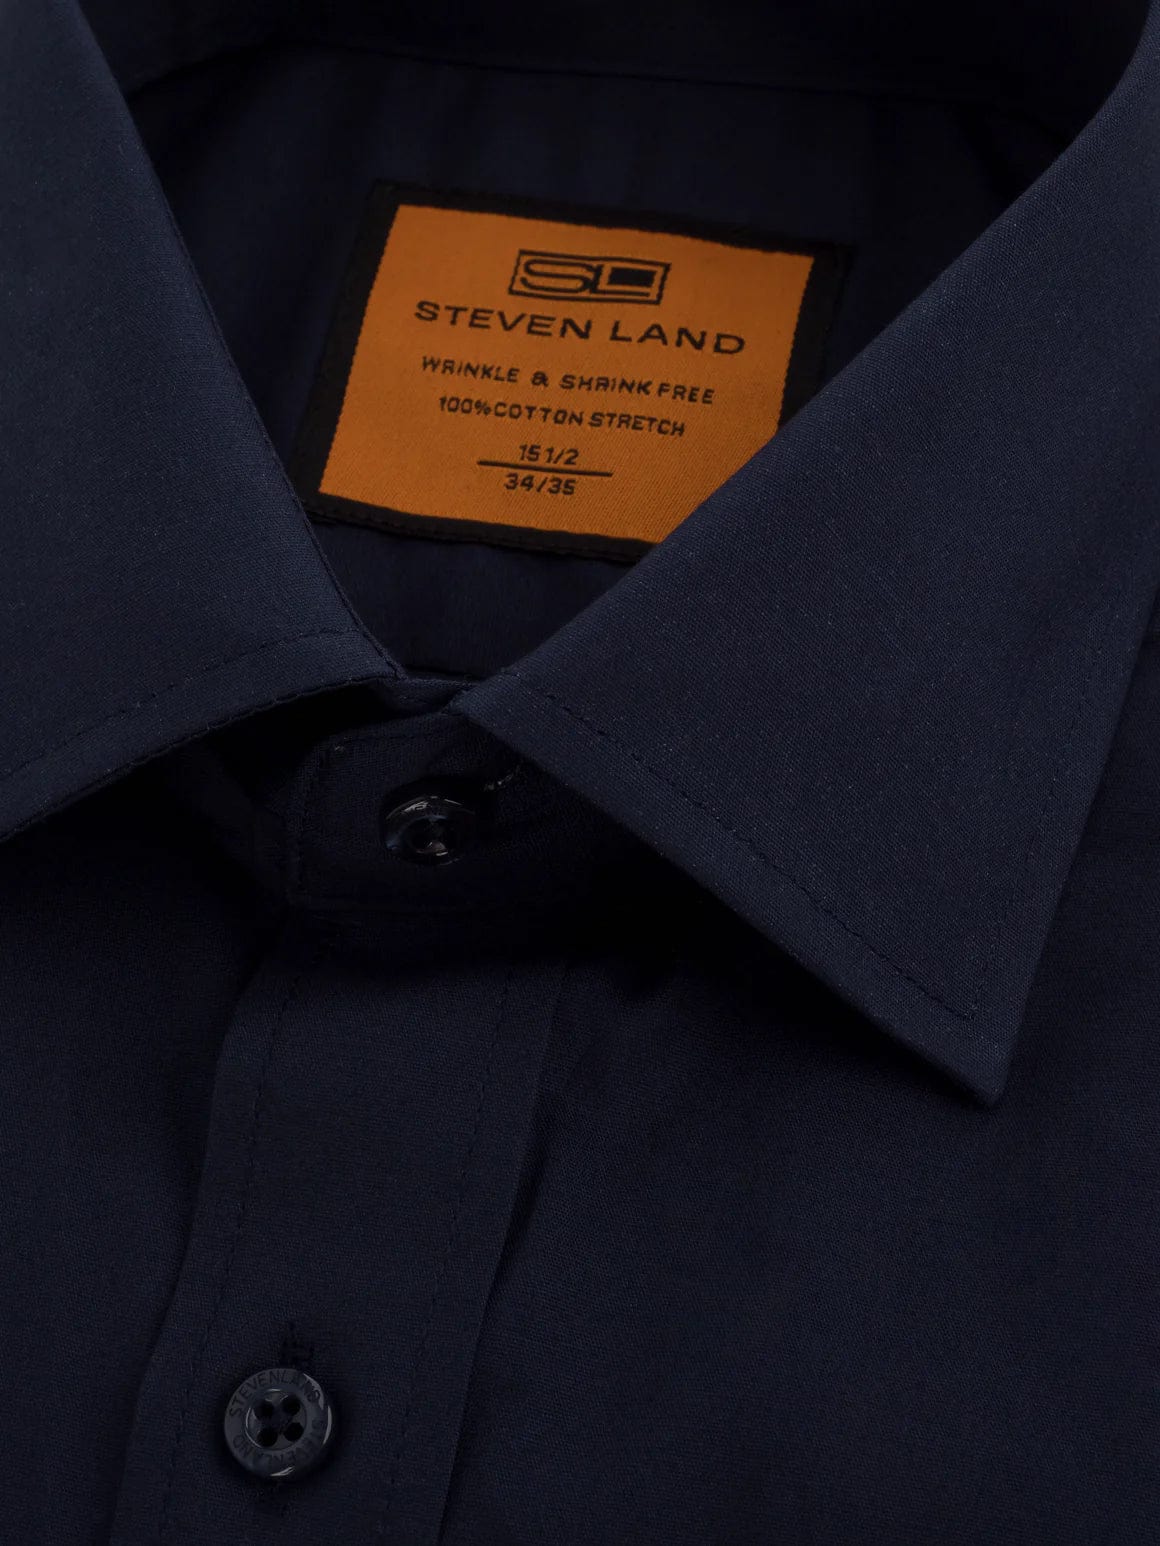 LND NECKWEAR INC. S CF Steven Land Dress Shirt| Classic Fit | French Cuff | 100% Cotton/Ds115f 6/7